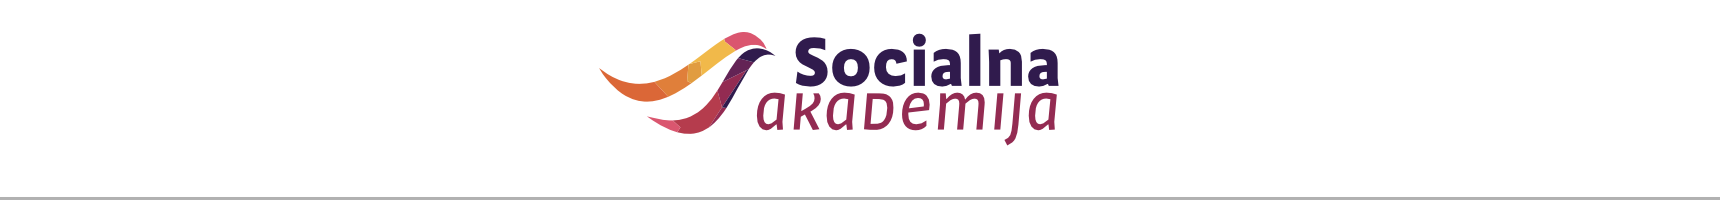 Socialna akademija logo